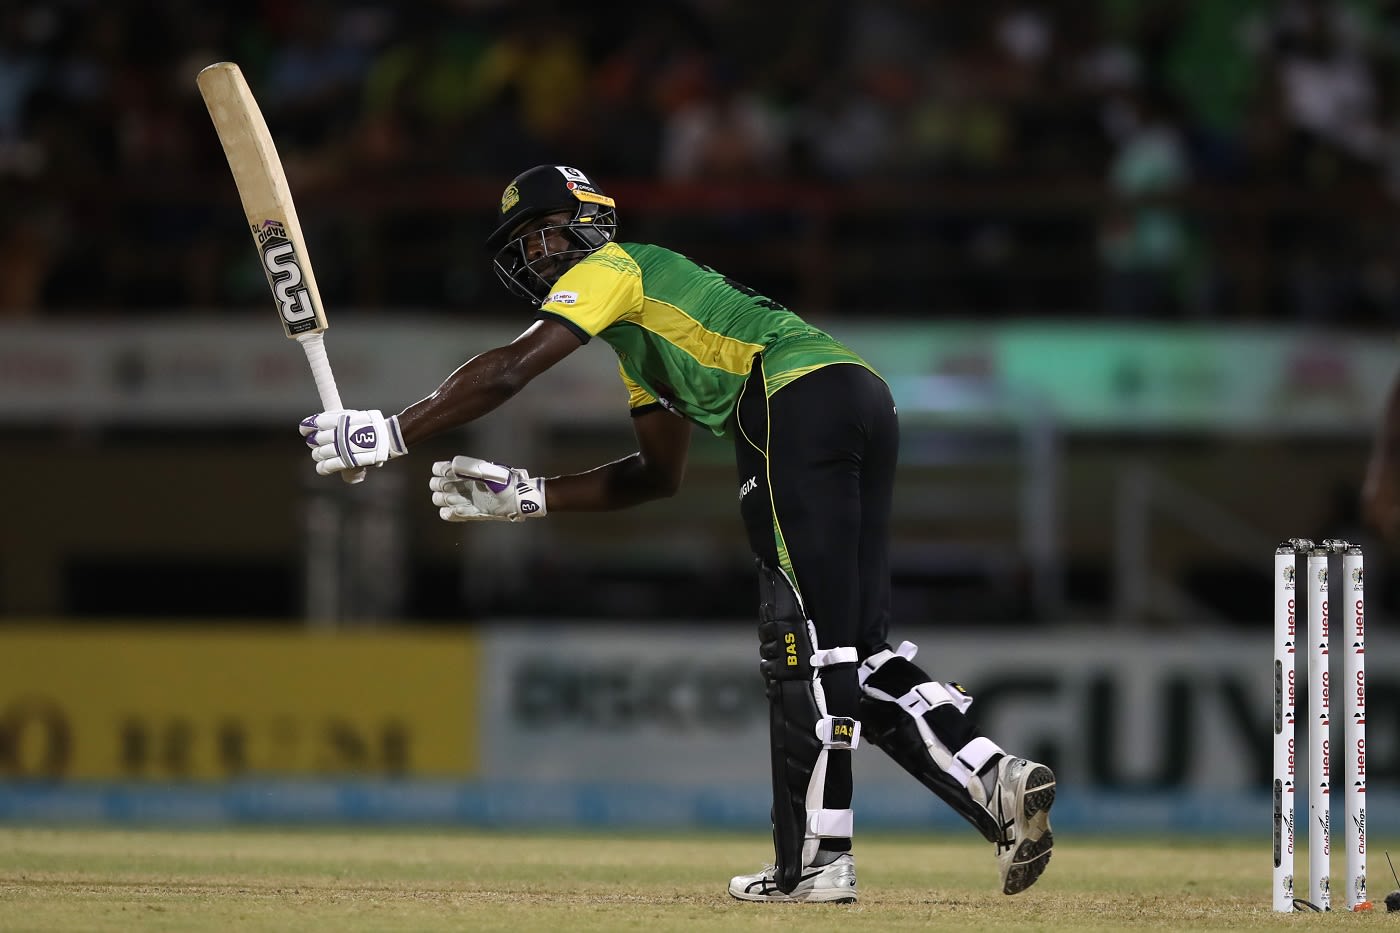 Cricket photo index - Royals vs Tallawahs, Caribbean Premier